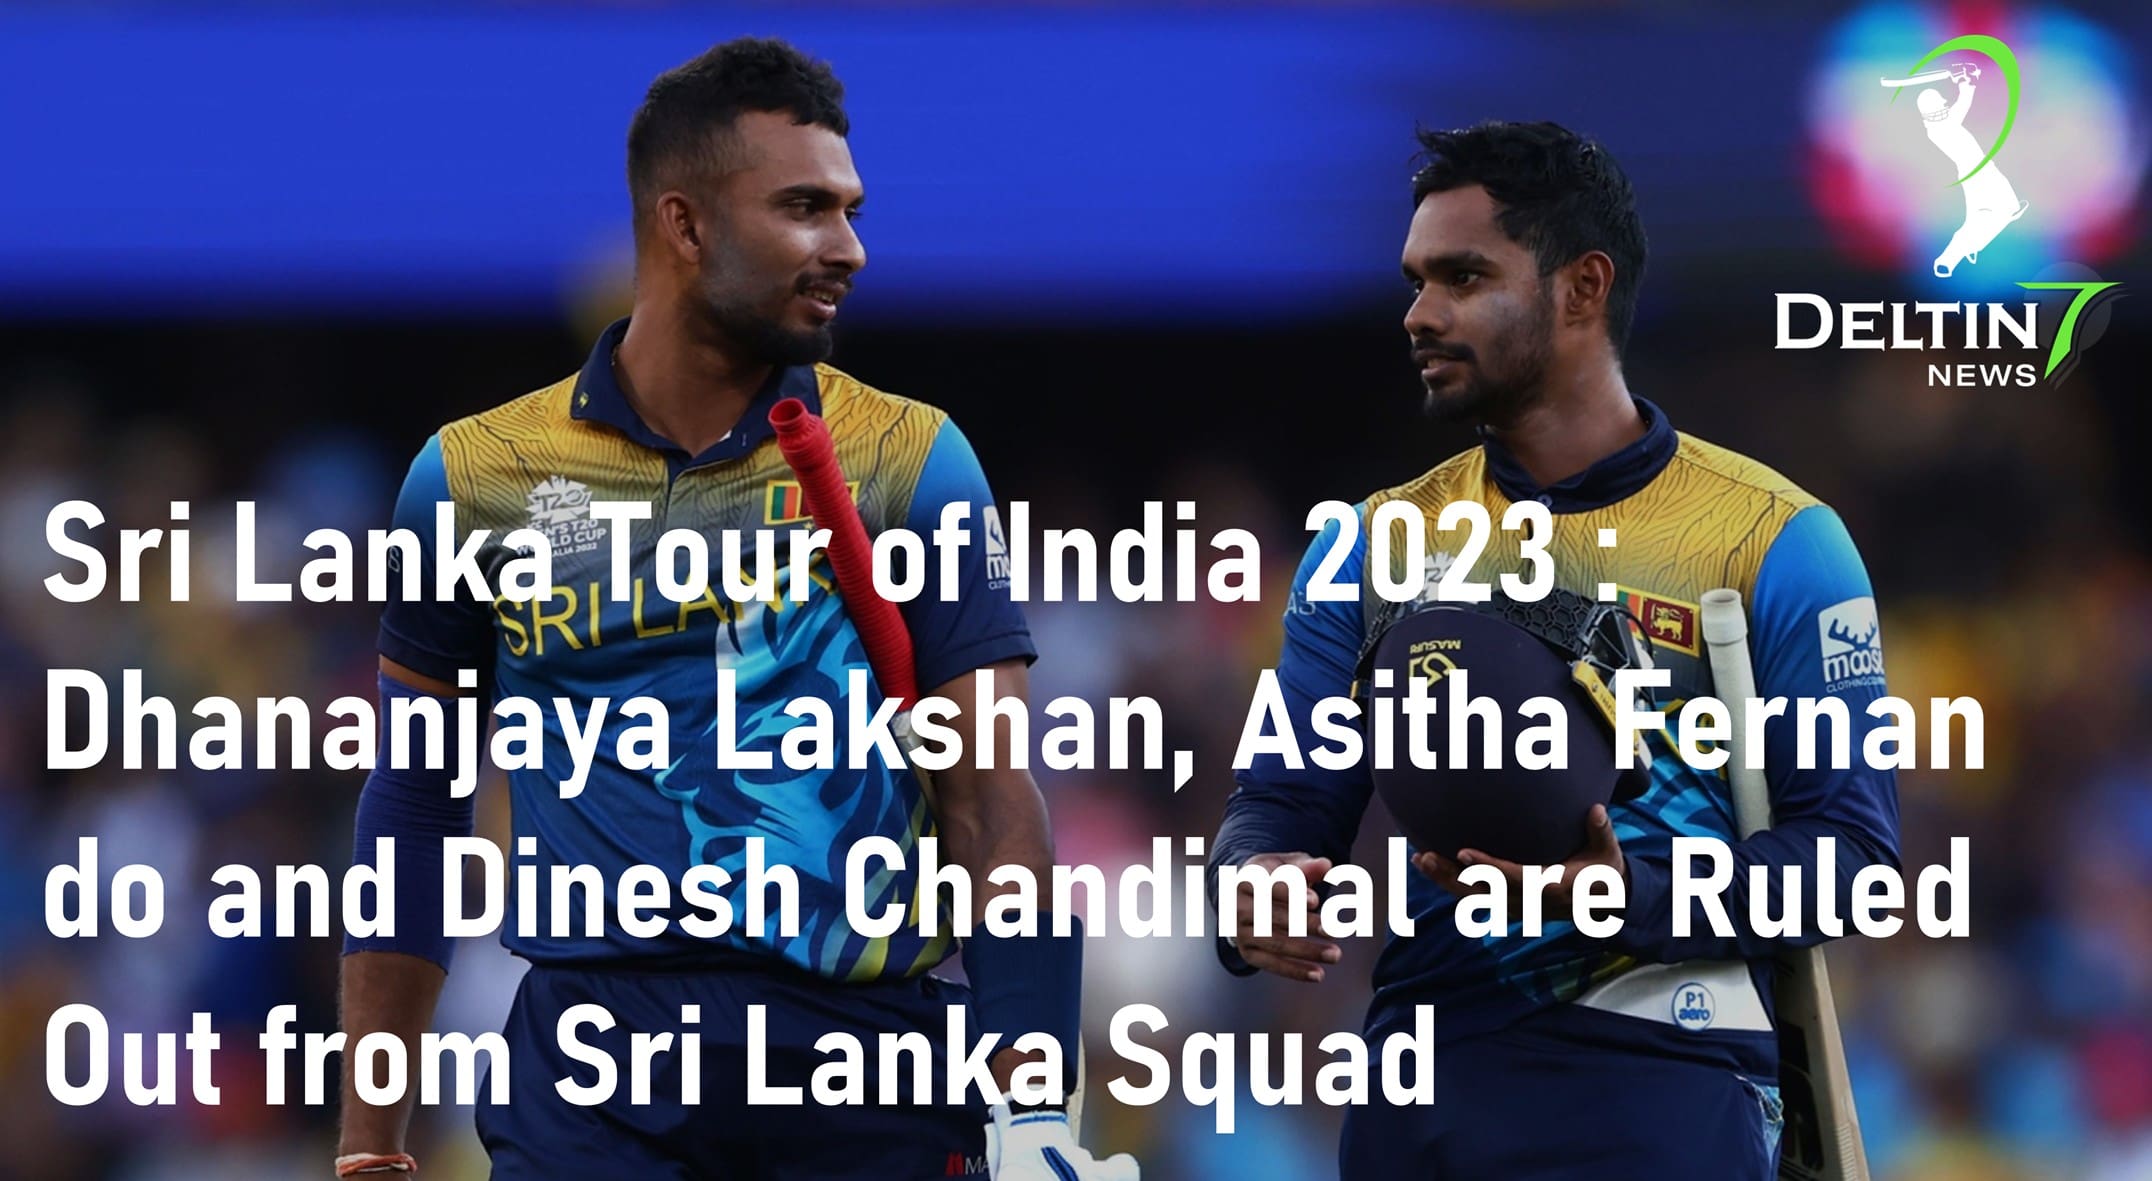 Sri Lanka Tour of India 2023 – <strong>Dhananjaya Lakshan, Asitha Fernando and Dinesh Chandimal</strong> are Ruled Out from Sri Lanka Squad